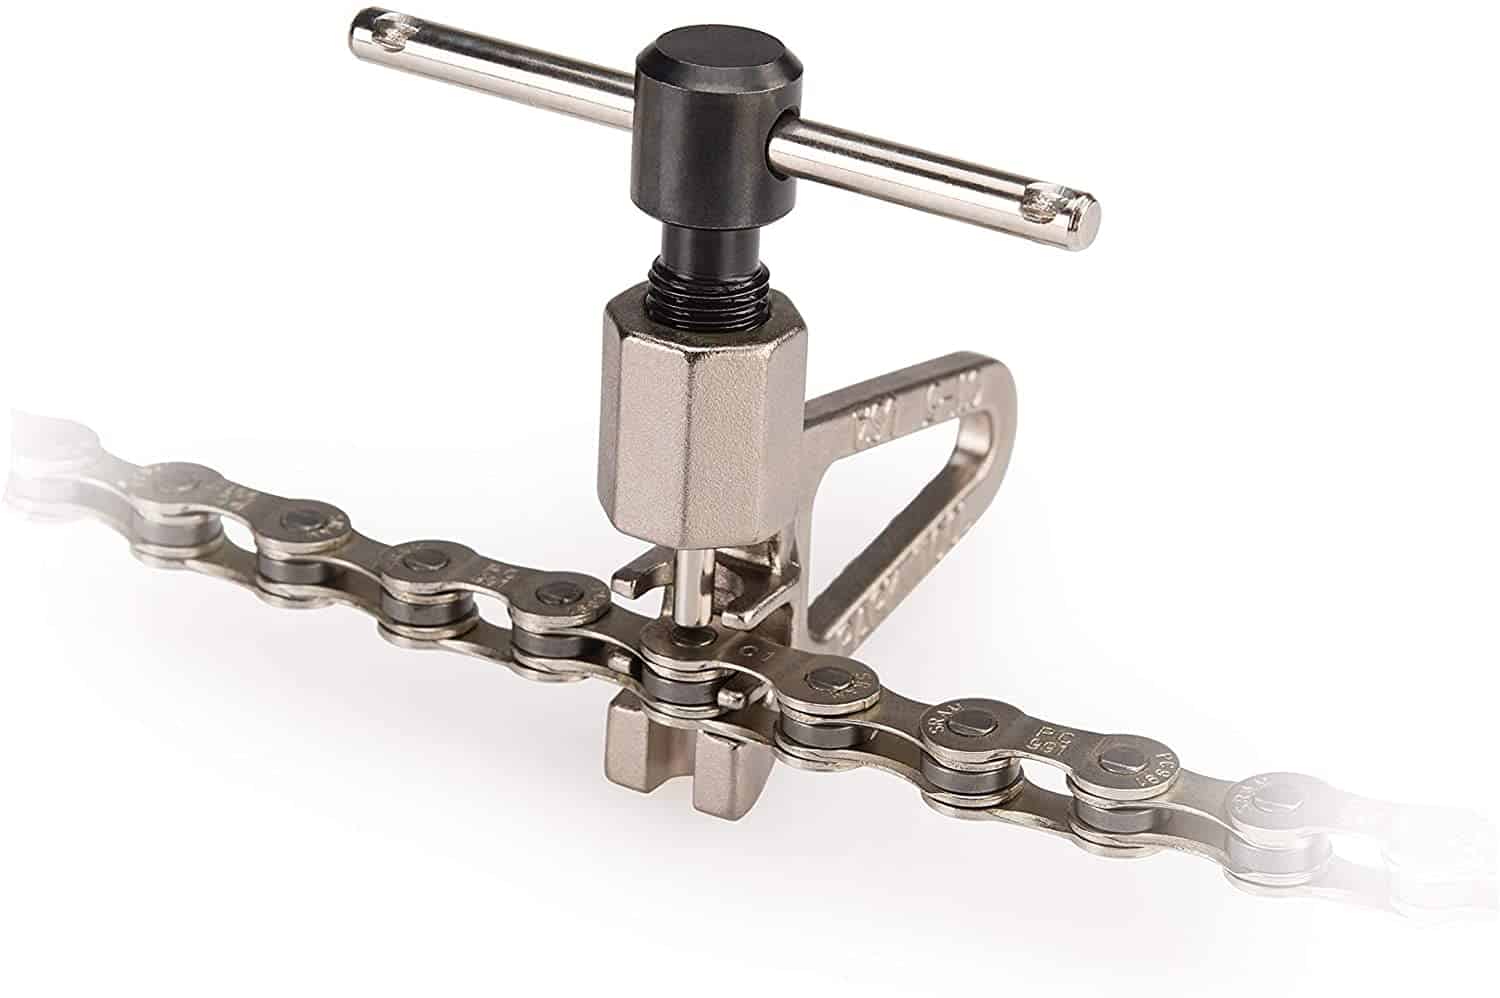 Park Tool CT-5 Mini Chain Brute Chain Tool